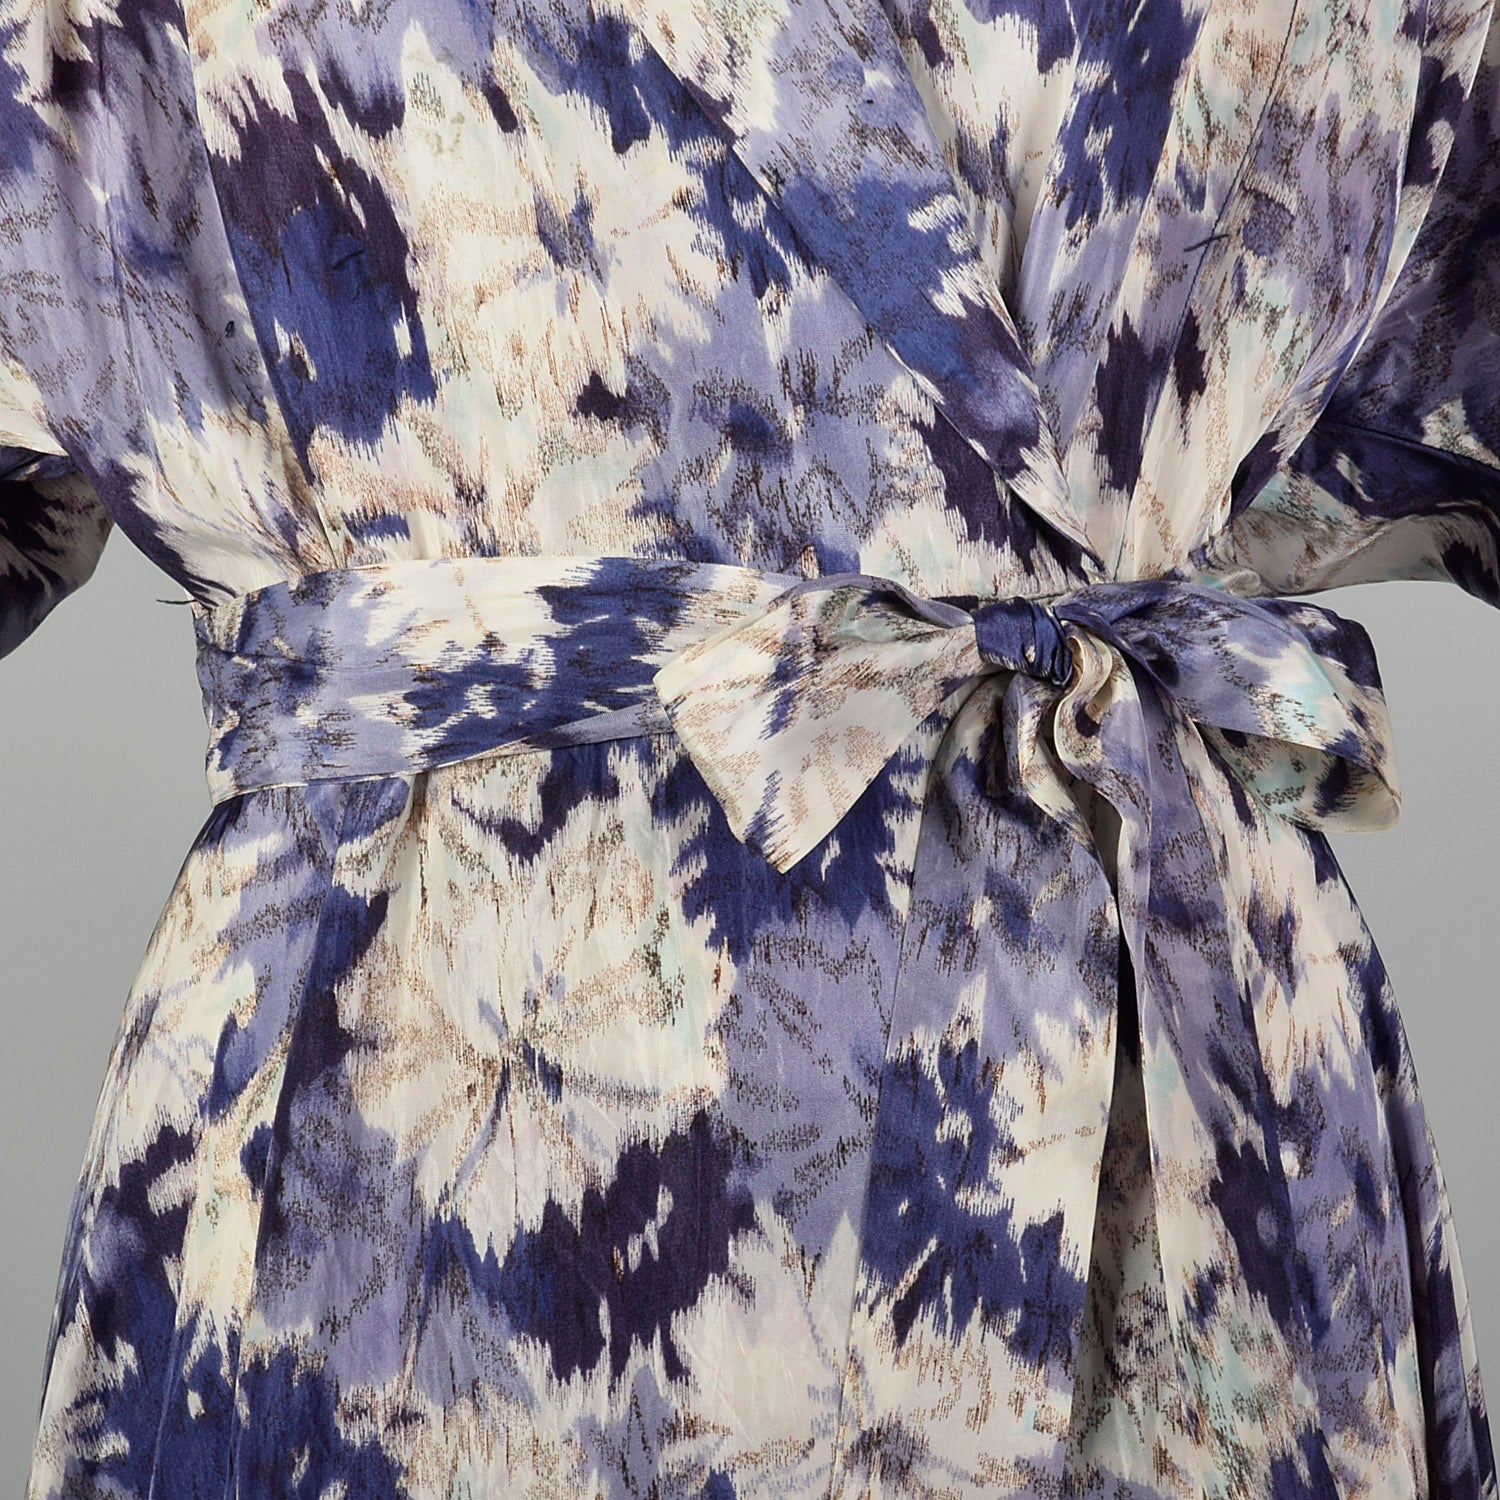 Large-XXL 1950s Purple Floral Robe